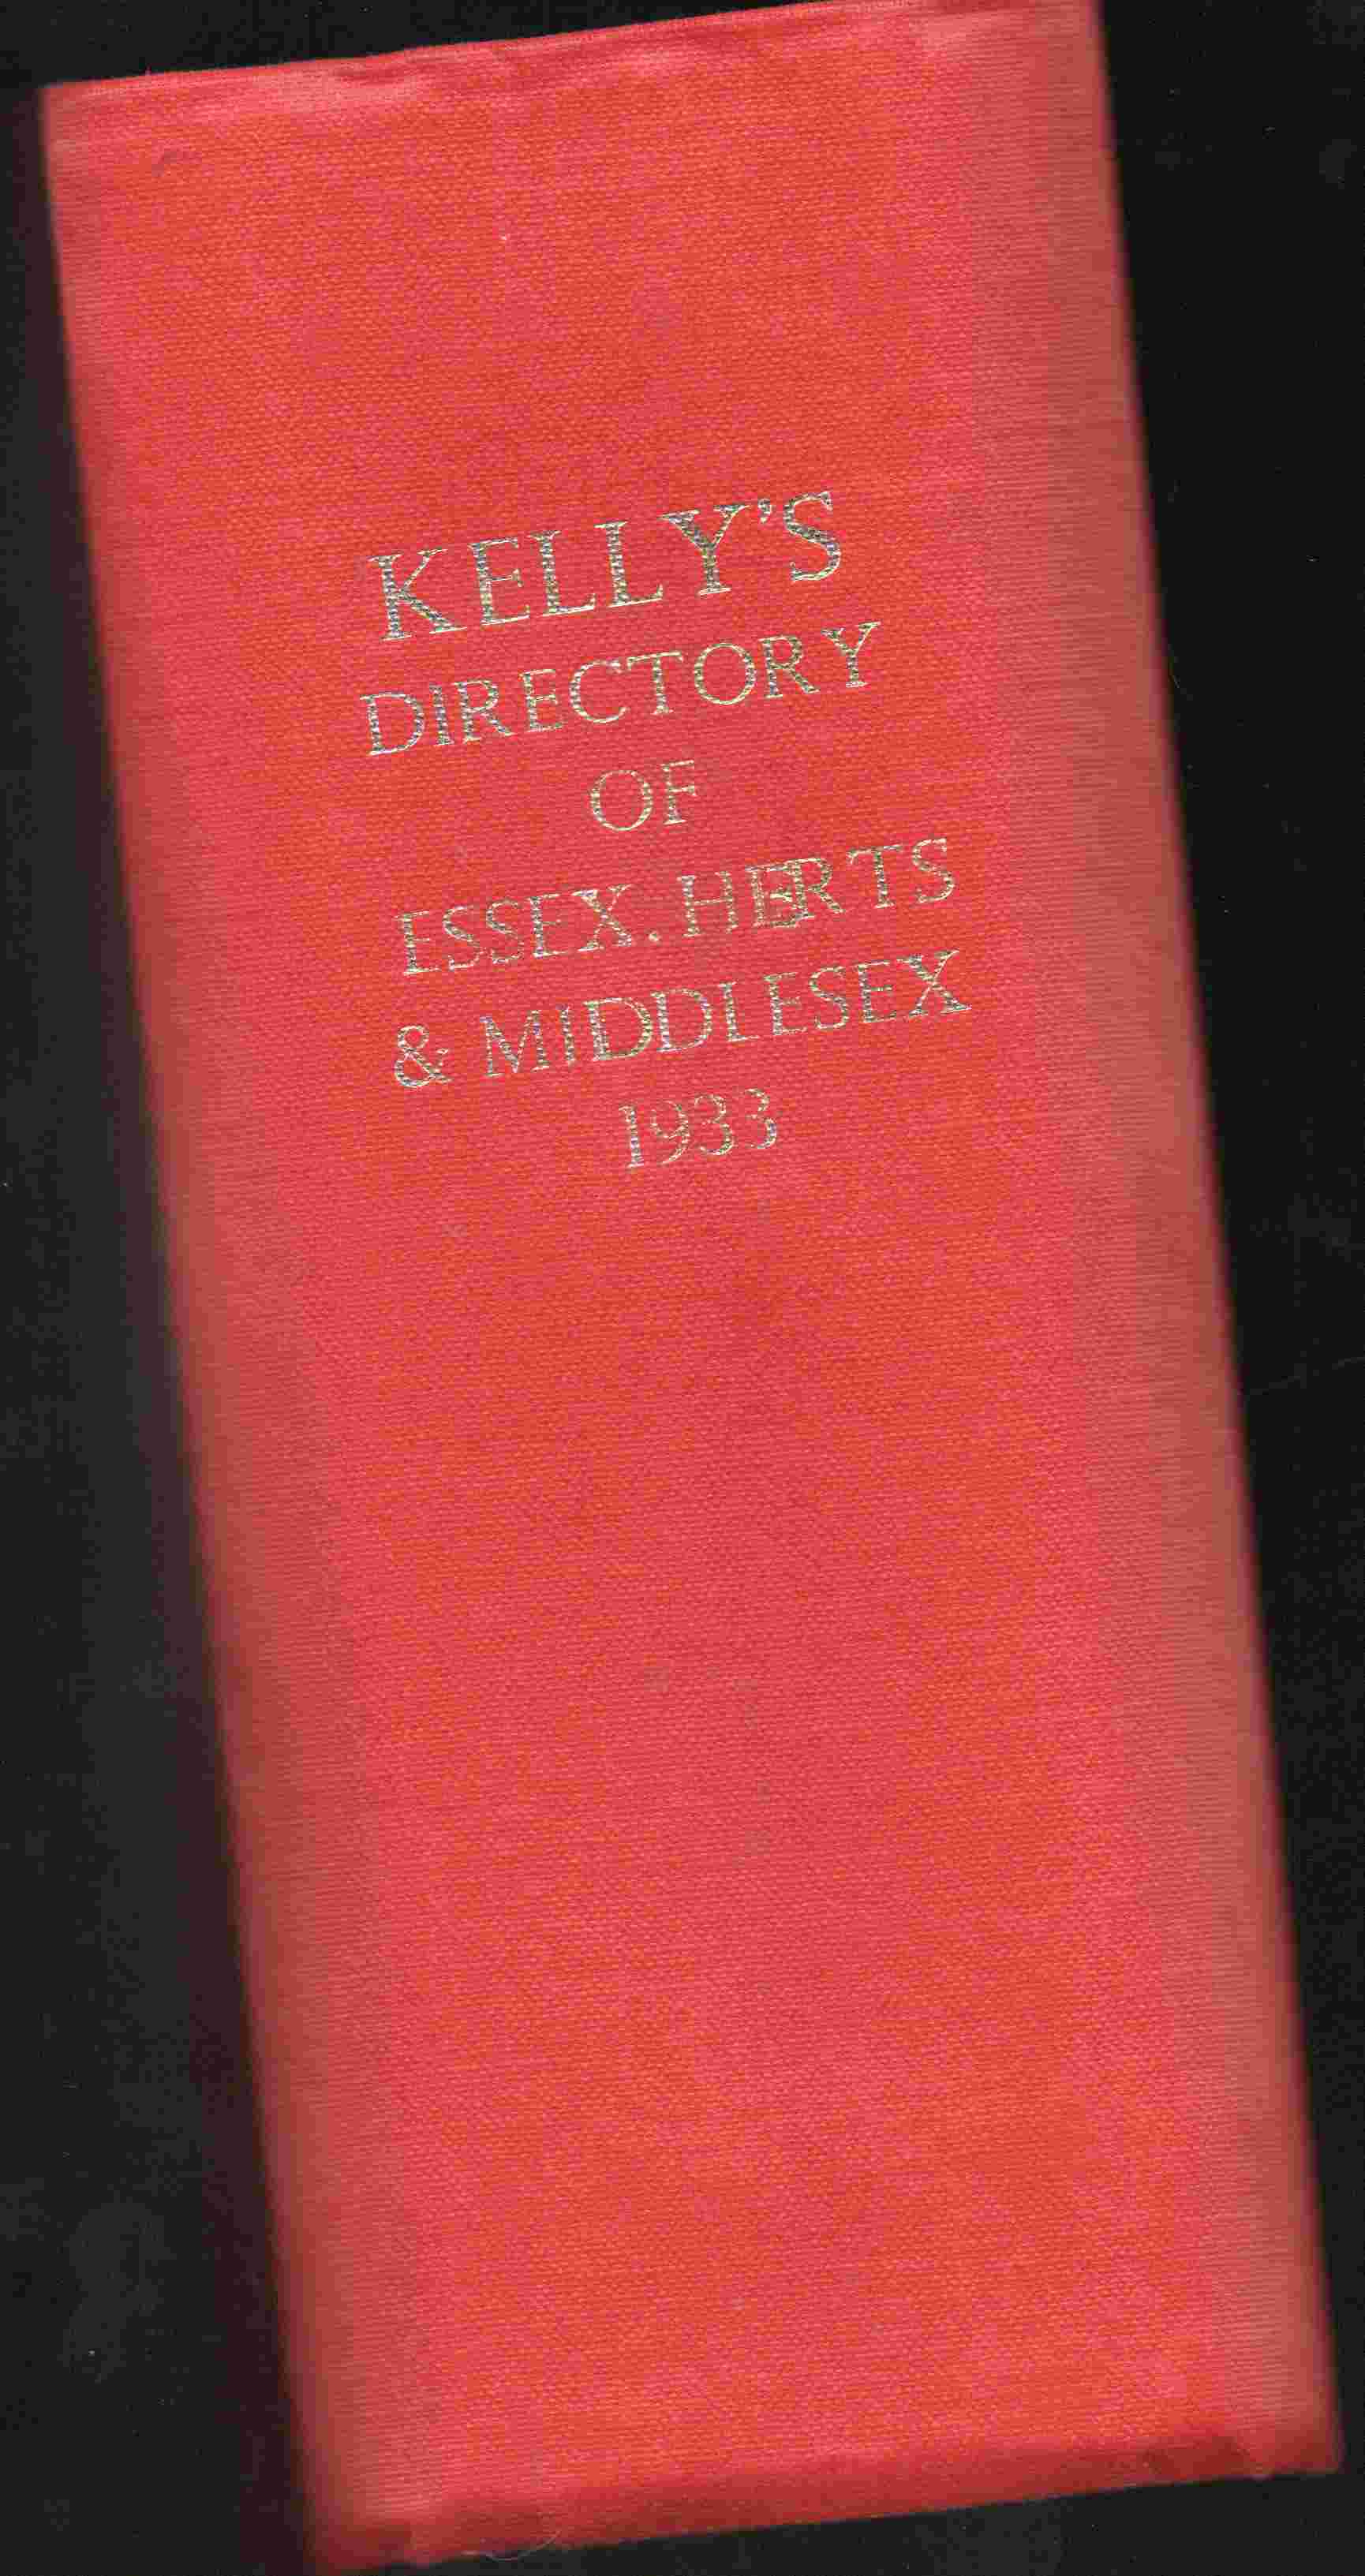 Kellys Directory of Essex 1933 CDROM 